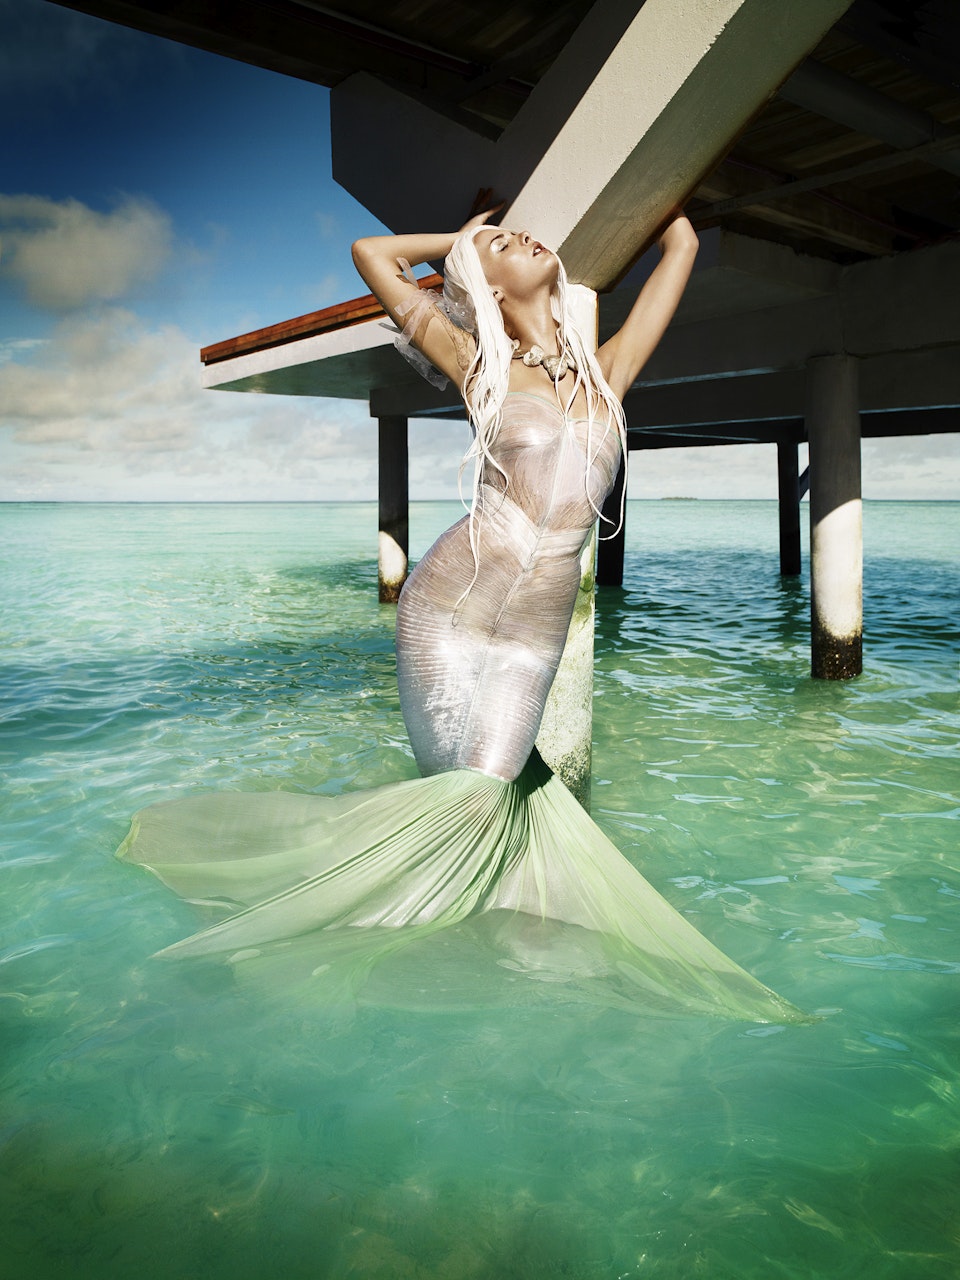 Vogue India Mermaid Story